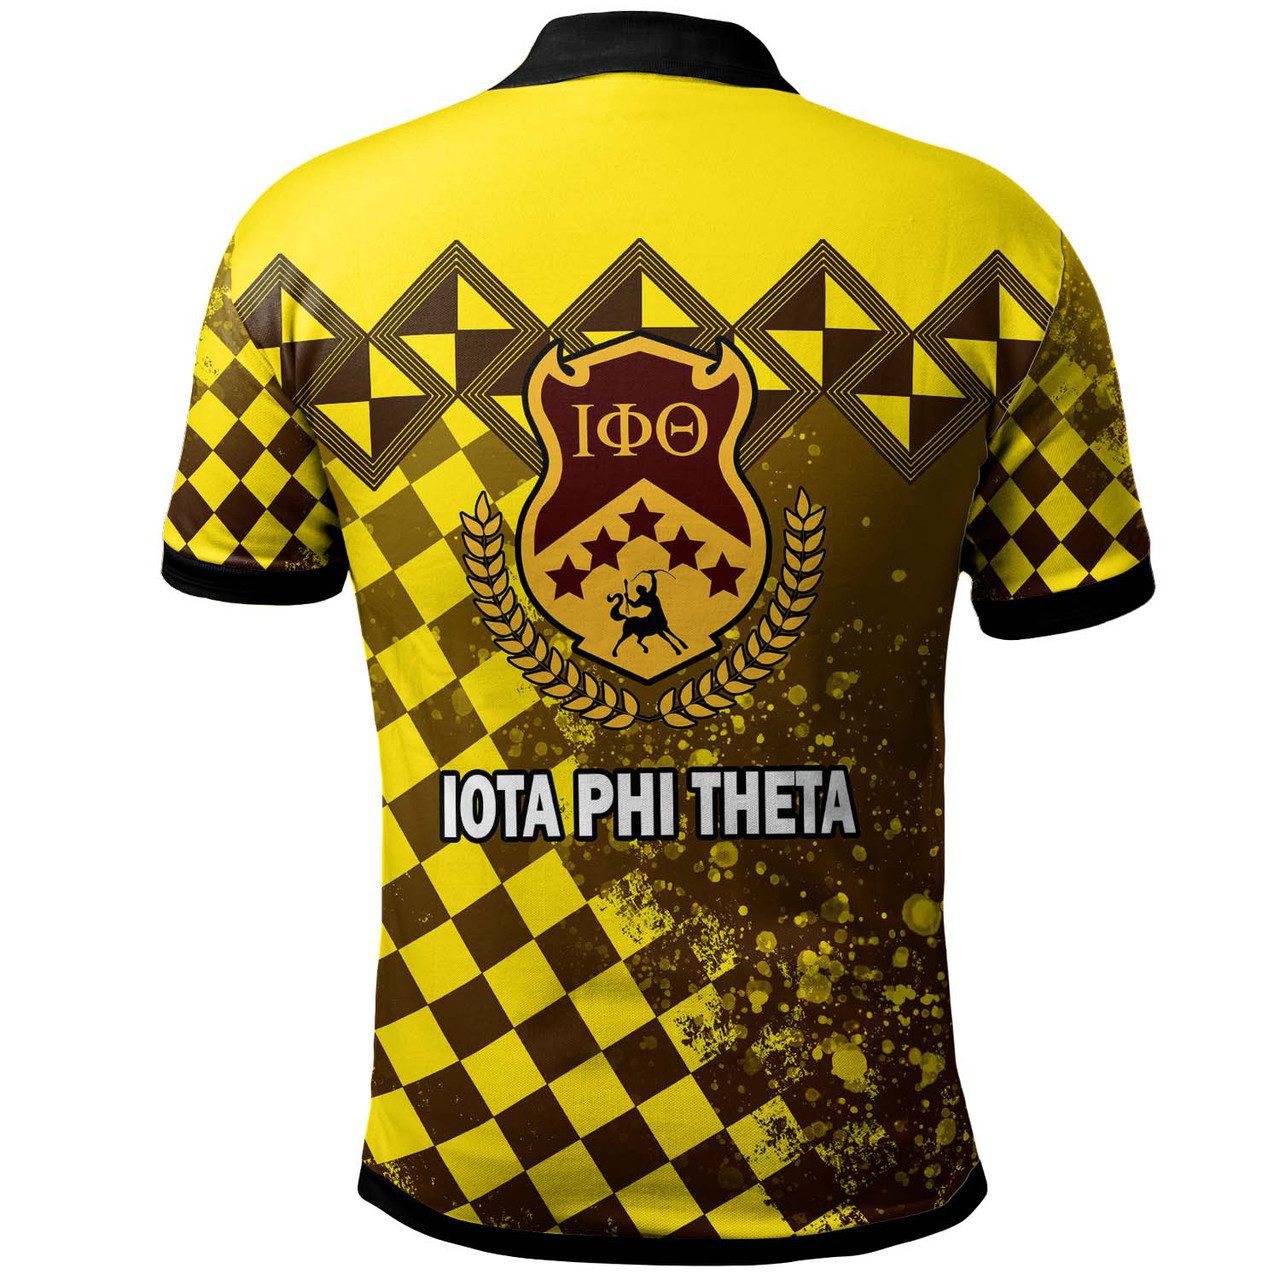 Iota Phi Theta Polo Shirt – Fraternity Iota Phi Theta Centaur Checkered Patterns Polo Shirt